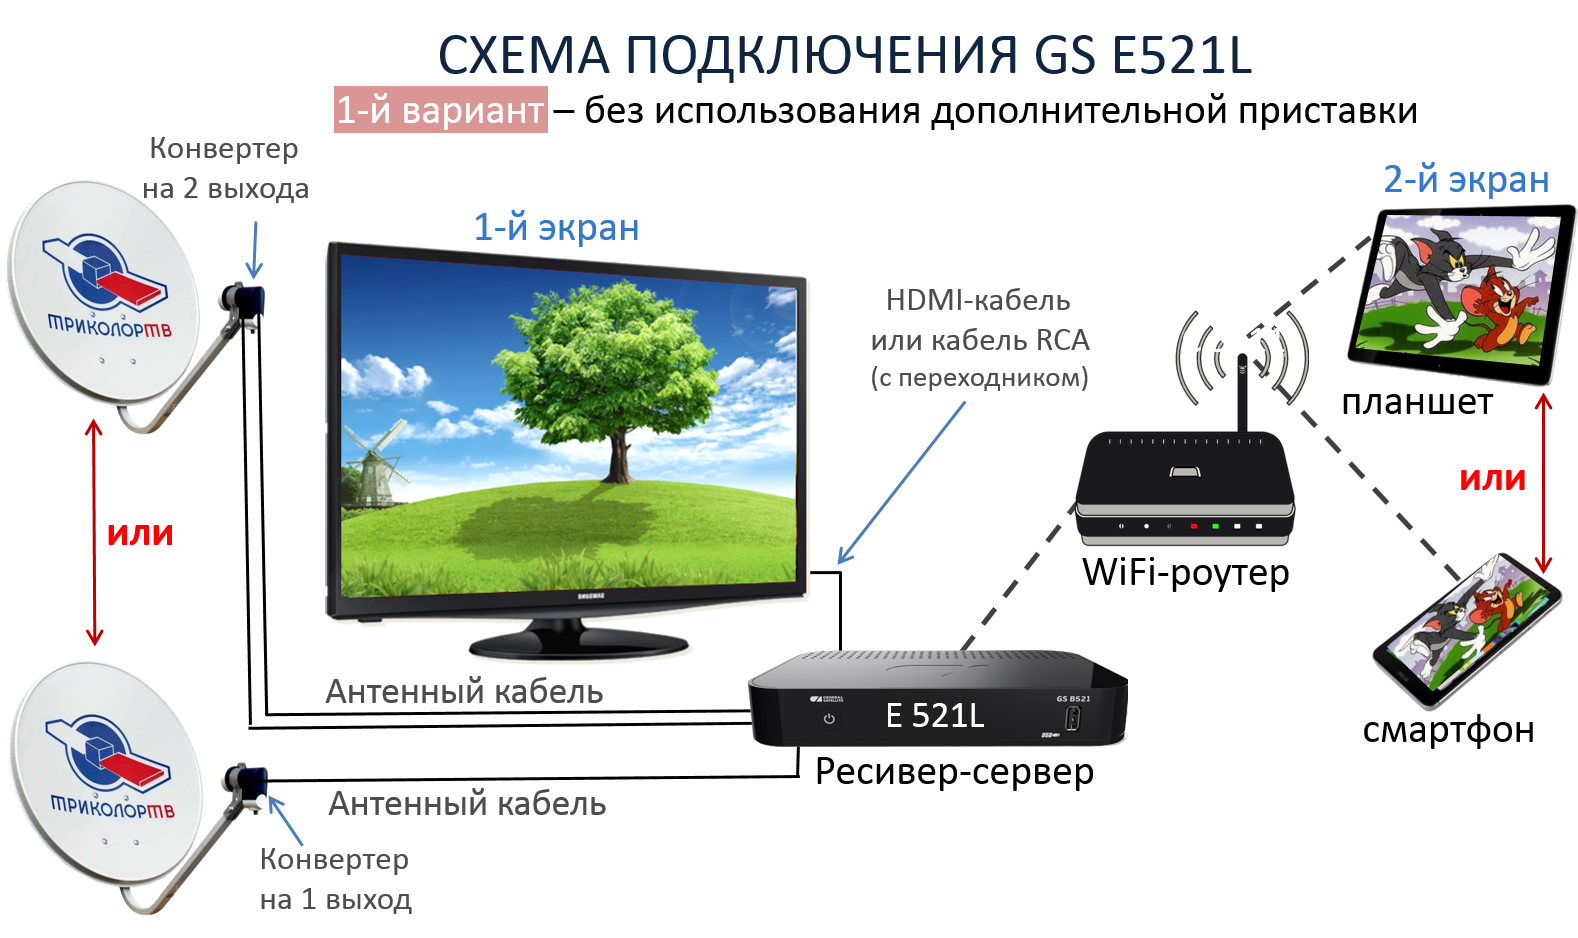 Триколор GS e521l. Схема подключения приемника Триколор на 2 телевизора и 2 приставки. Триколор ТВ приемник GS e521l. Схема подключения спутникового ТВ Триколор. Как подключить каналы через приставку